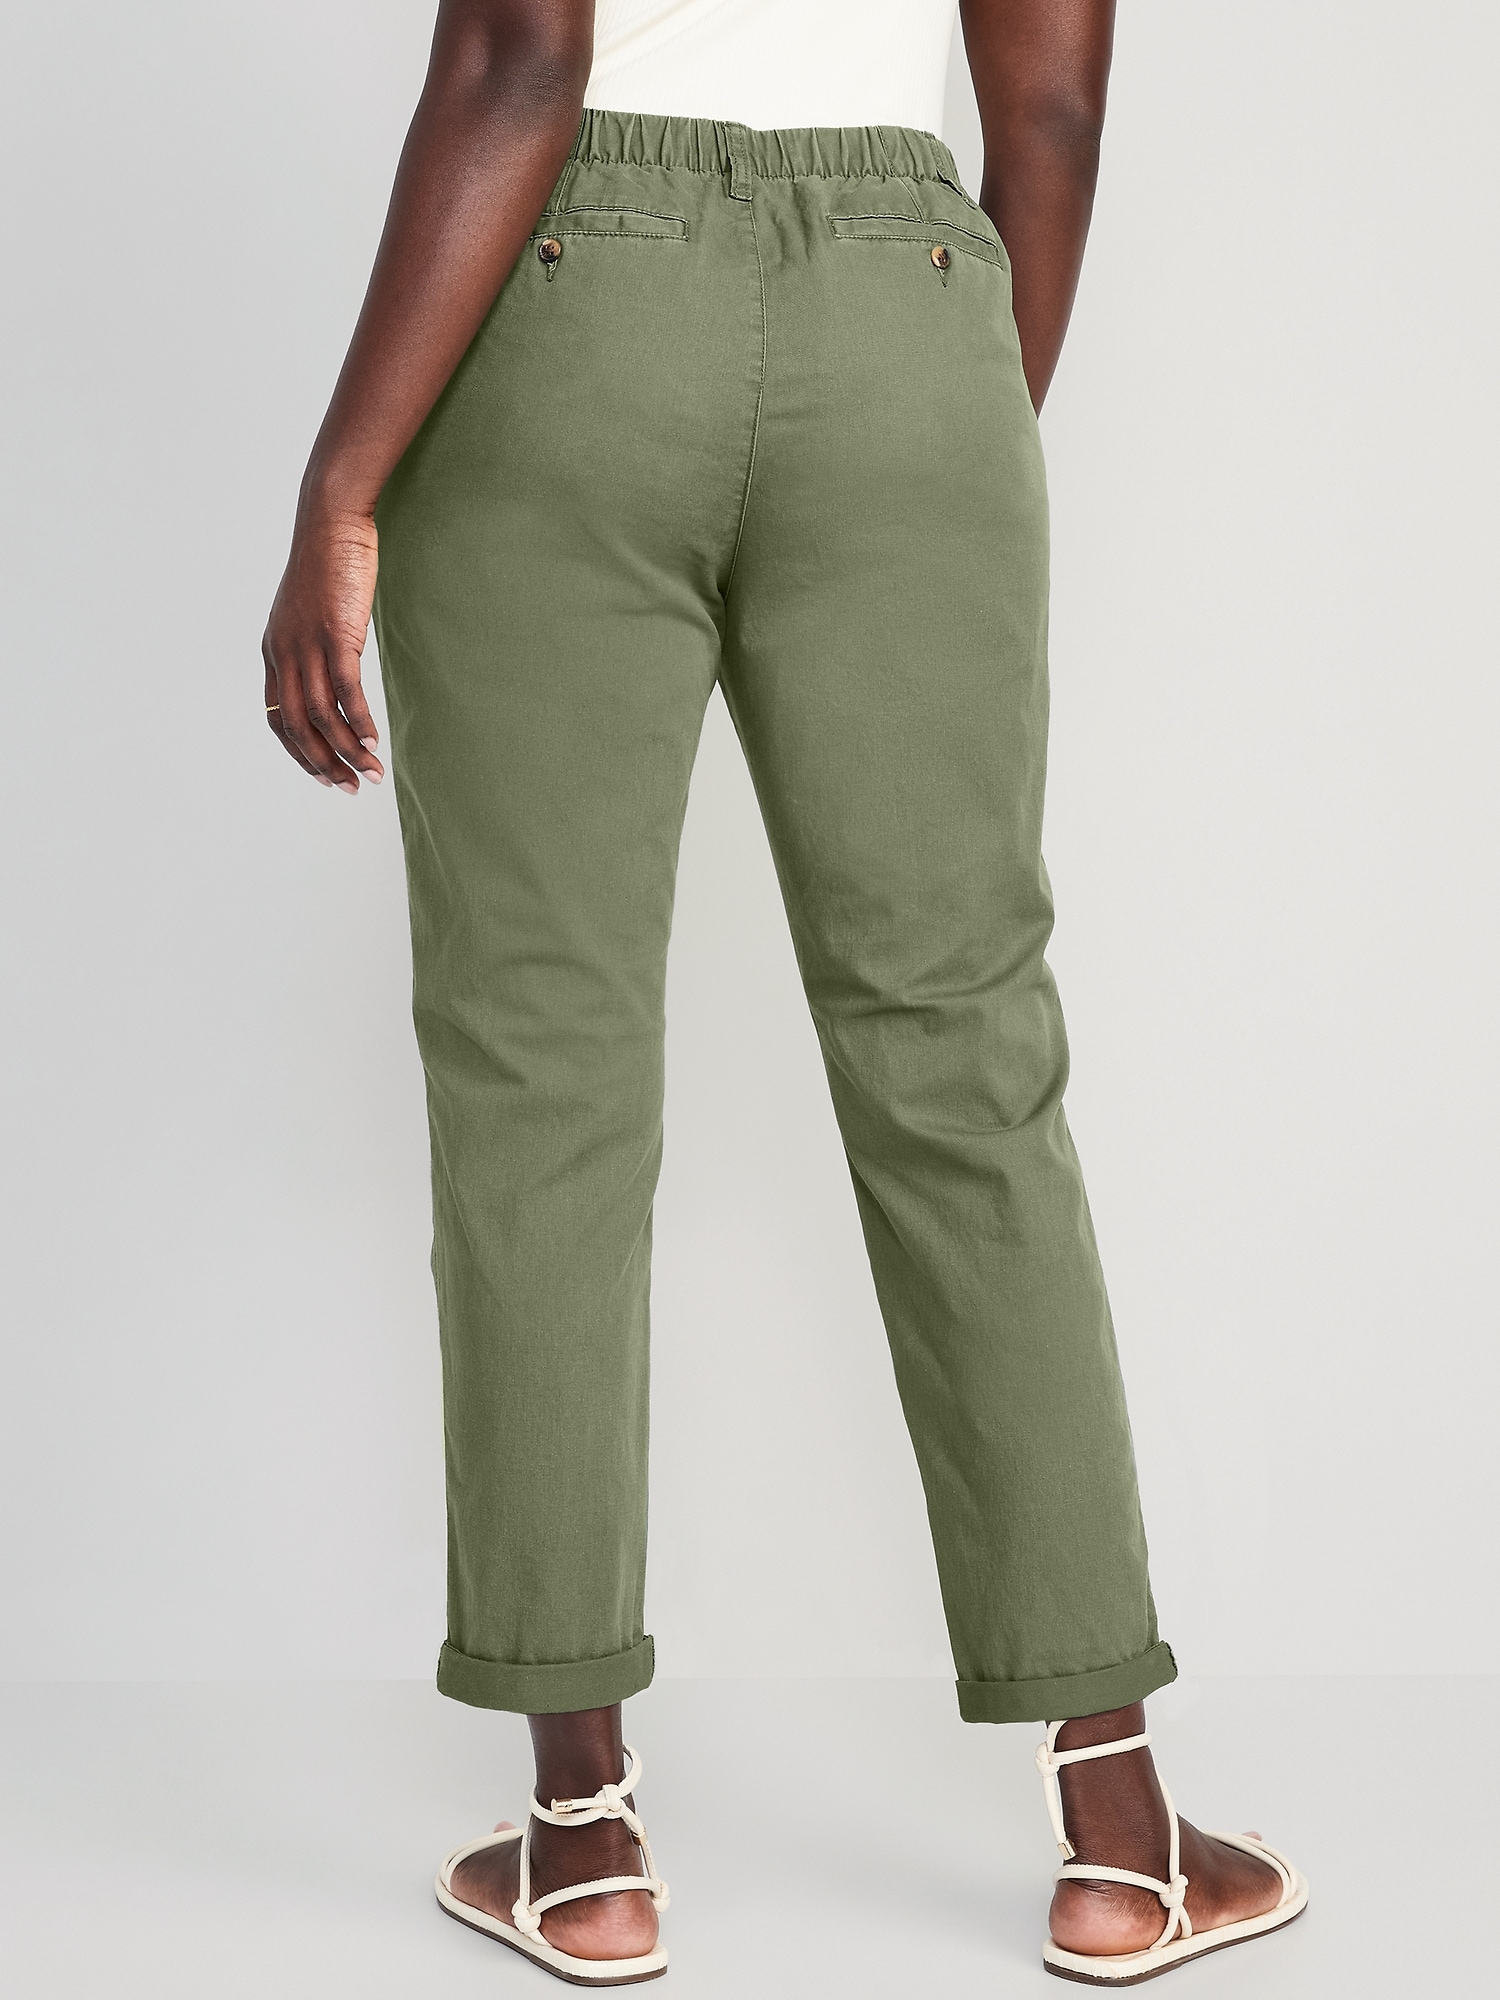 Old Navy Pants Womens 6 Low Rise Crop Zipper Hems Cargo Pockets